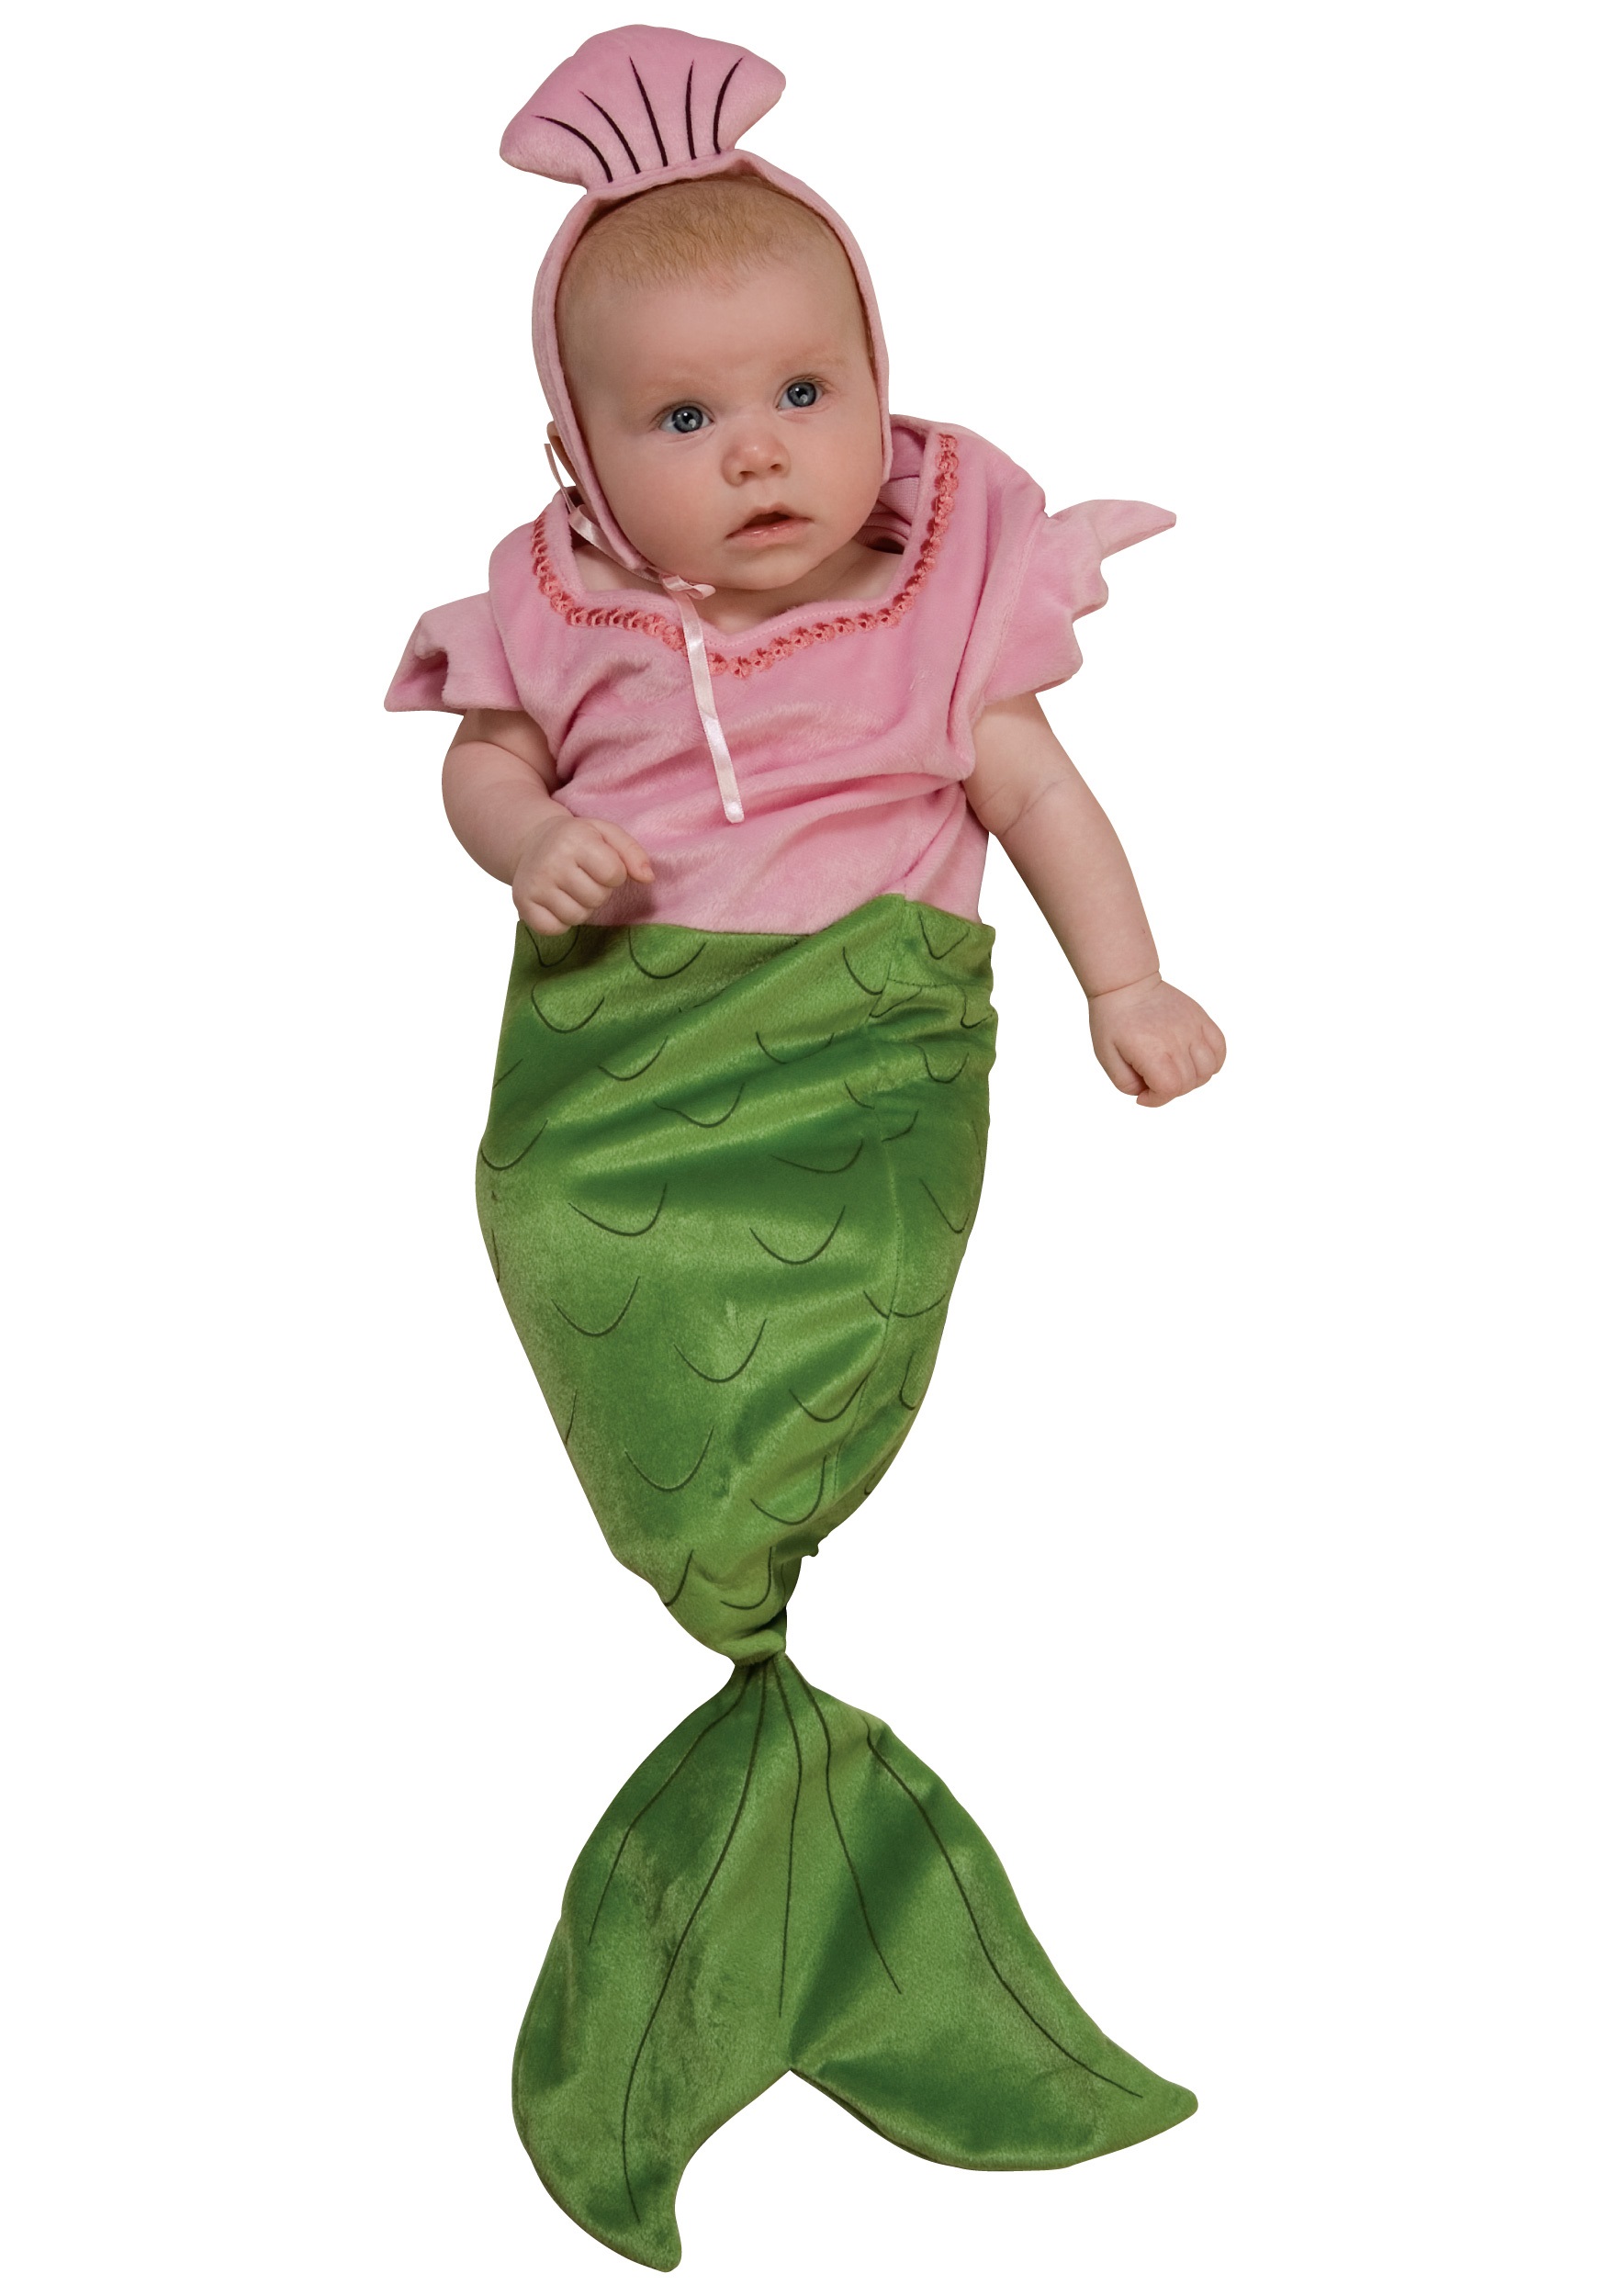 mermaid costume for babies